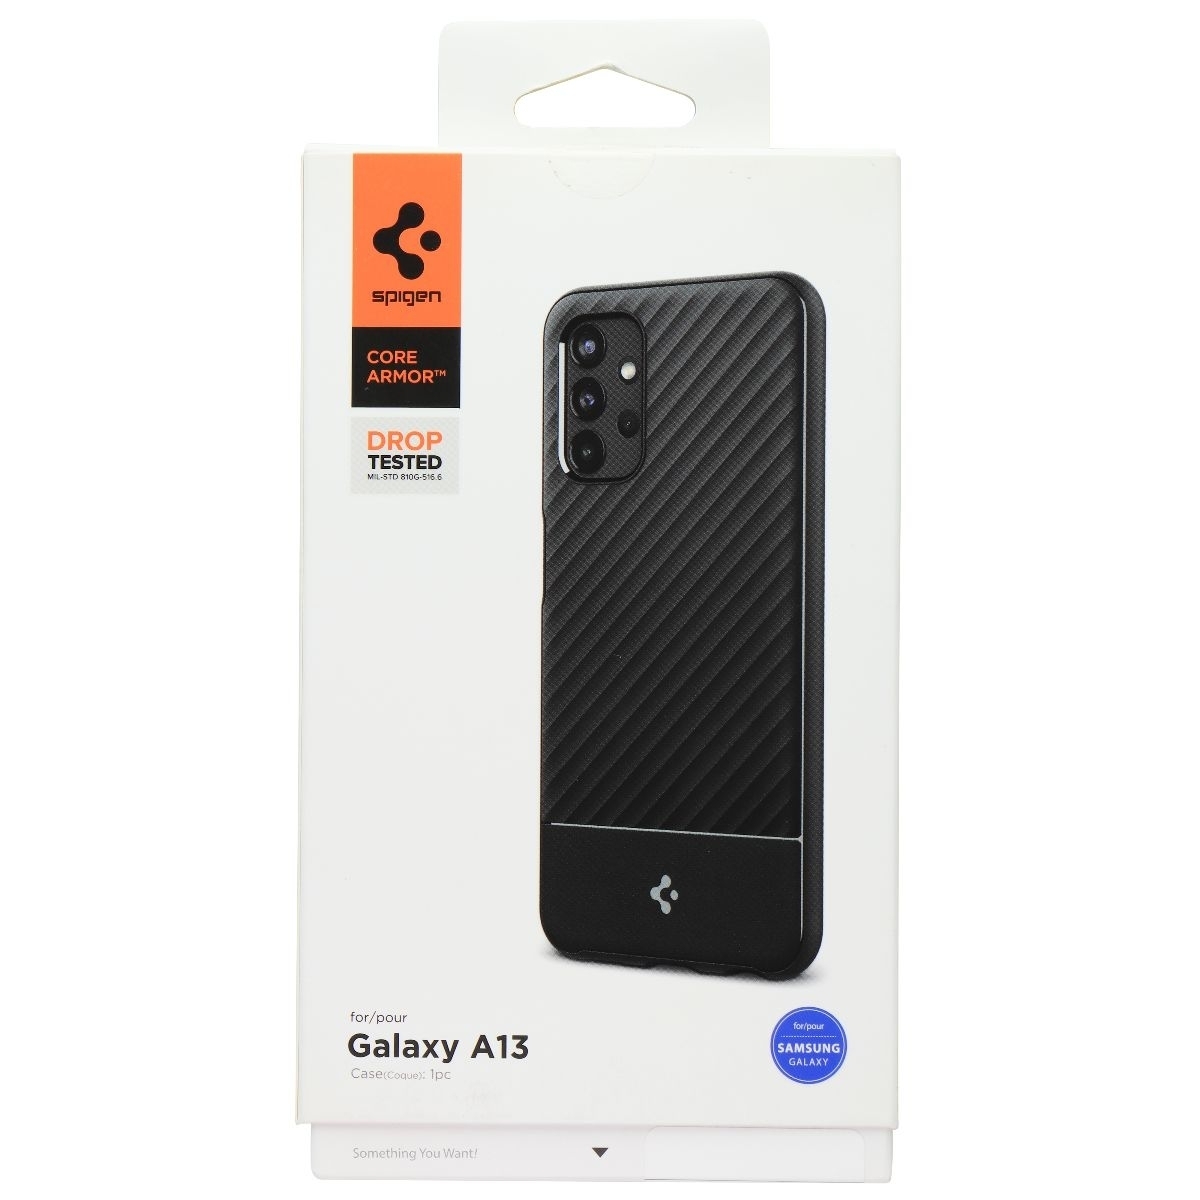 Spigen Core Armor Case For Samsung Galaxy A13 - Black (Refurbished)